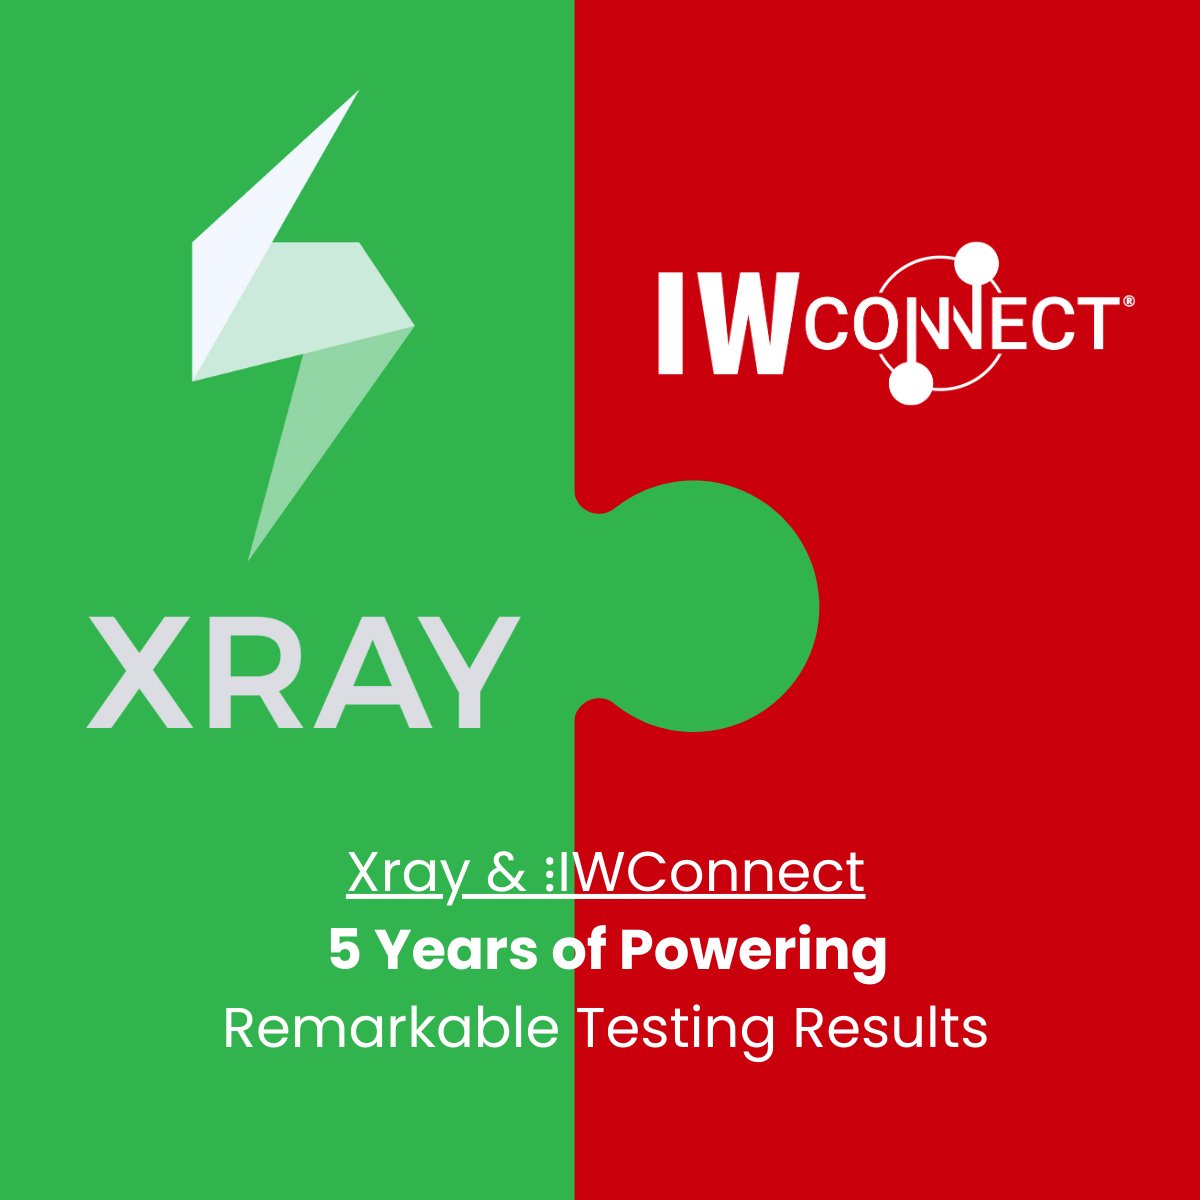 Fast dev needs fast testing! @XrayApp simplifies Jira test management. We're award-winning Xray partners! Learn more & transform testing: bit.ly/43NI3ug #Xray #testing #softwaredevelopment